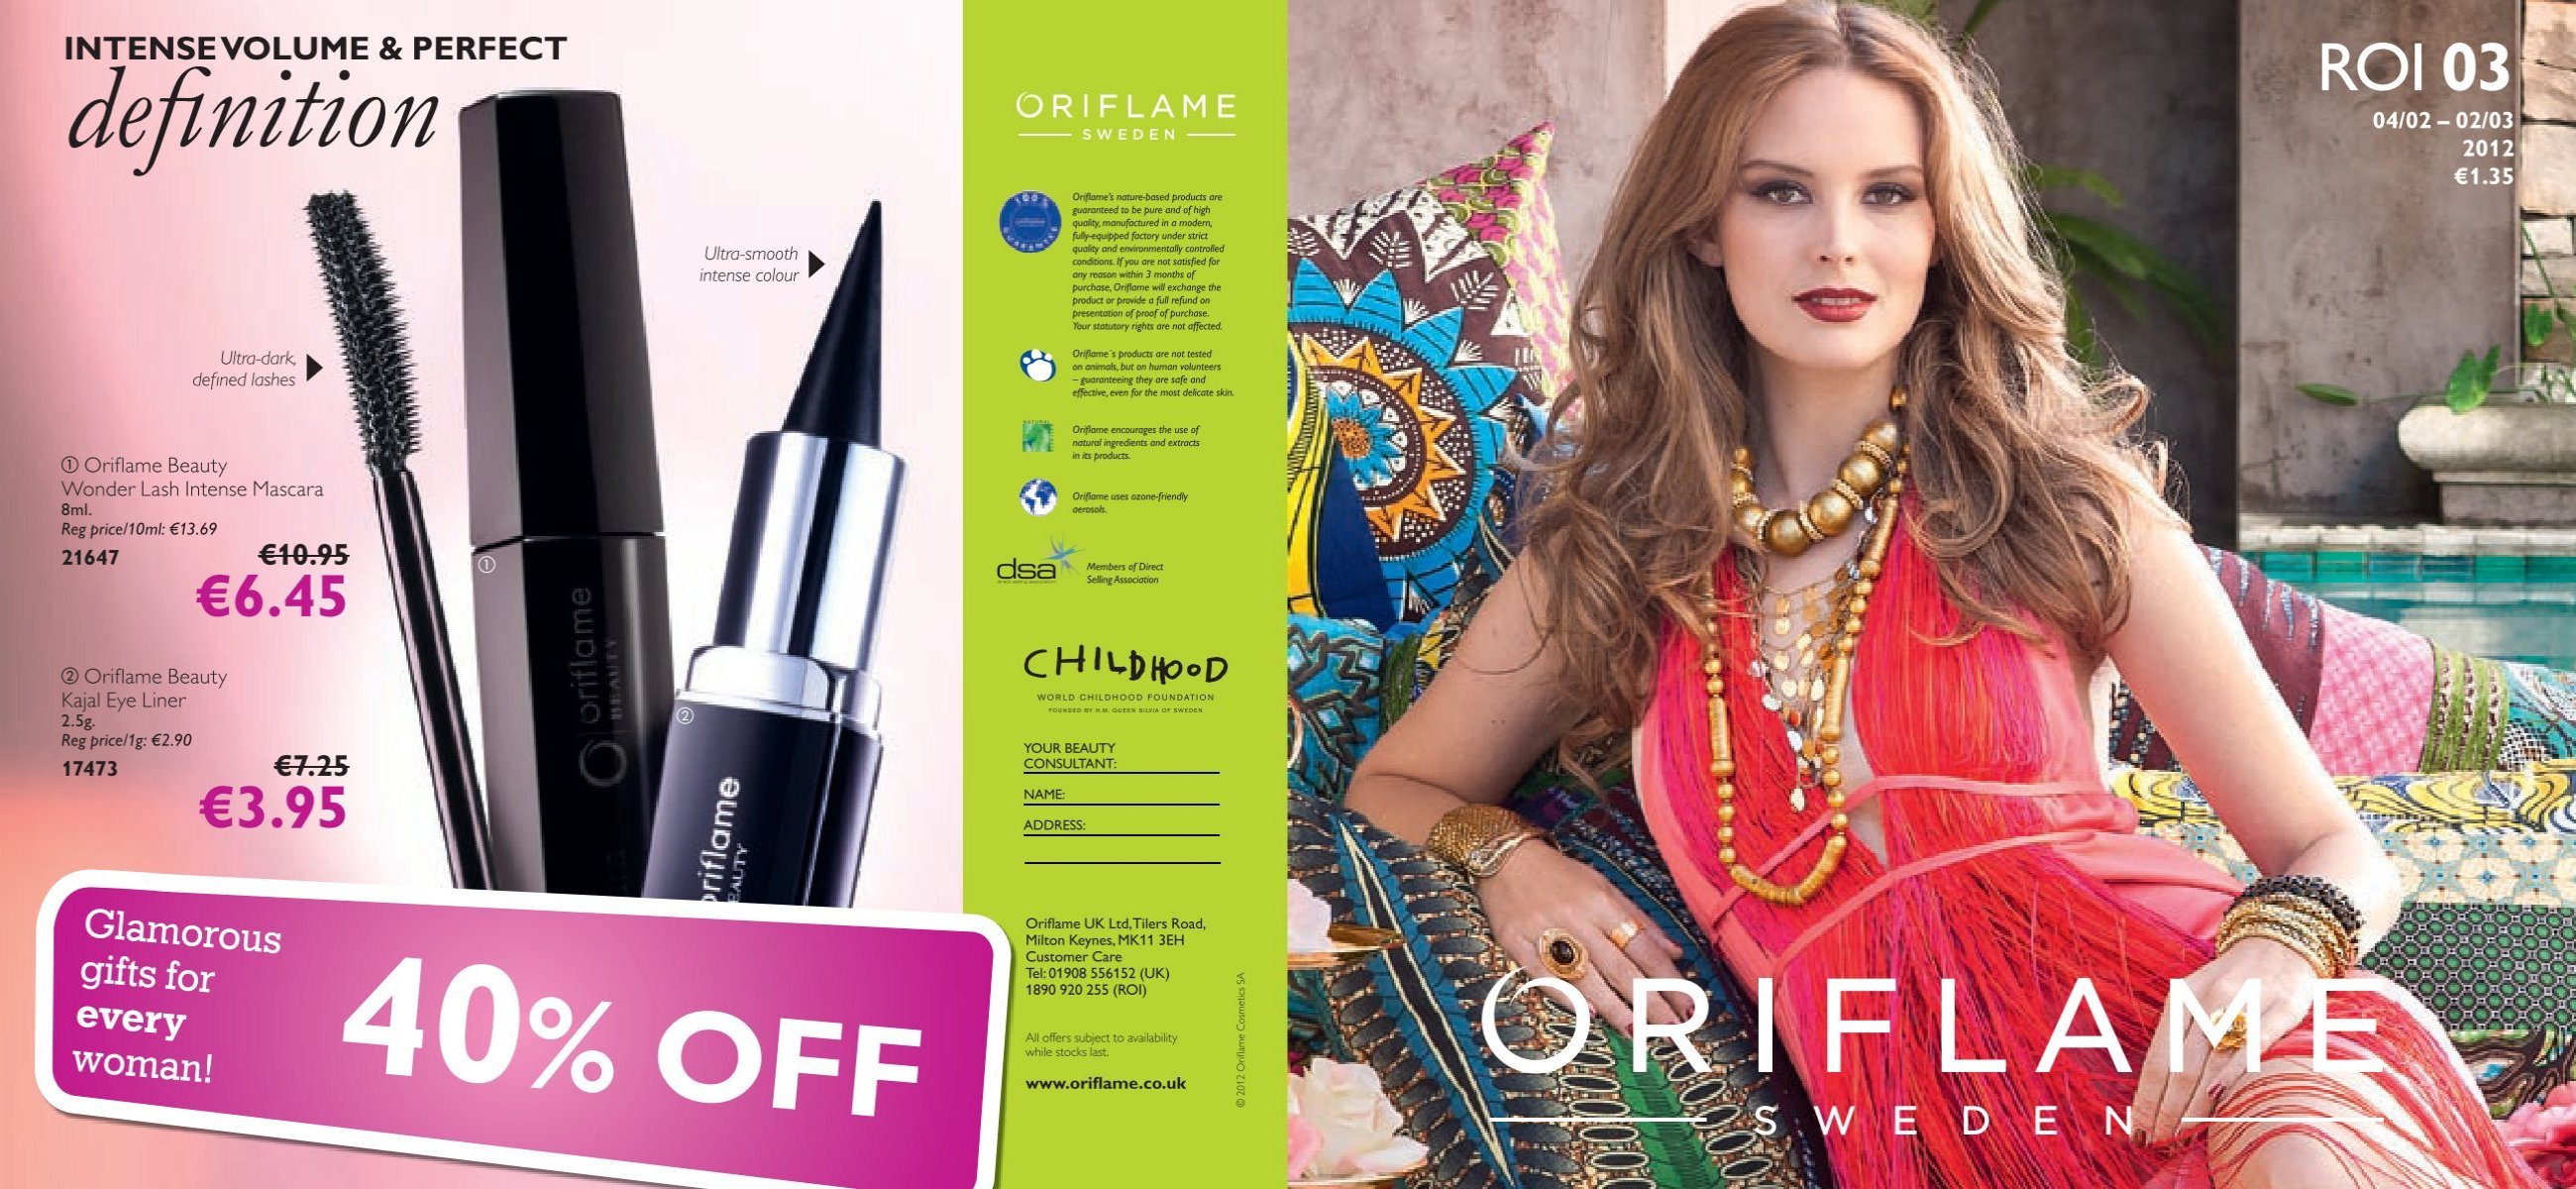 Oriflame Sweden oriflame green vanity bag makeup and jewellary